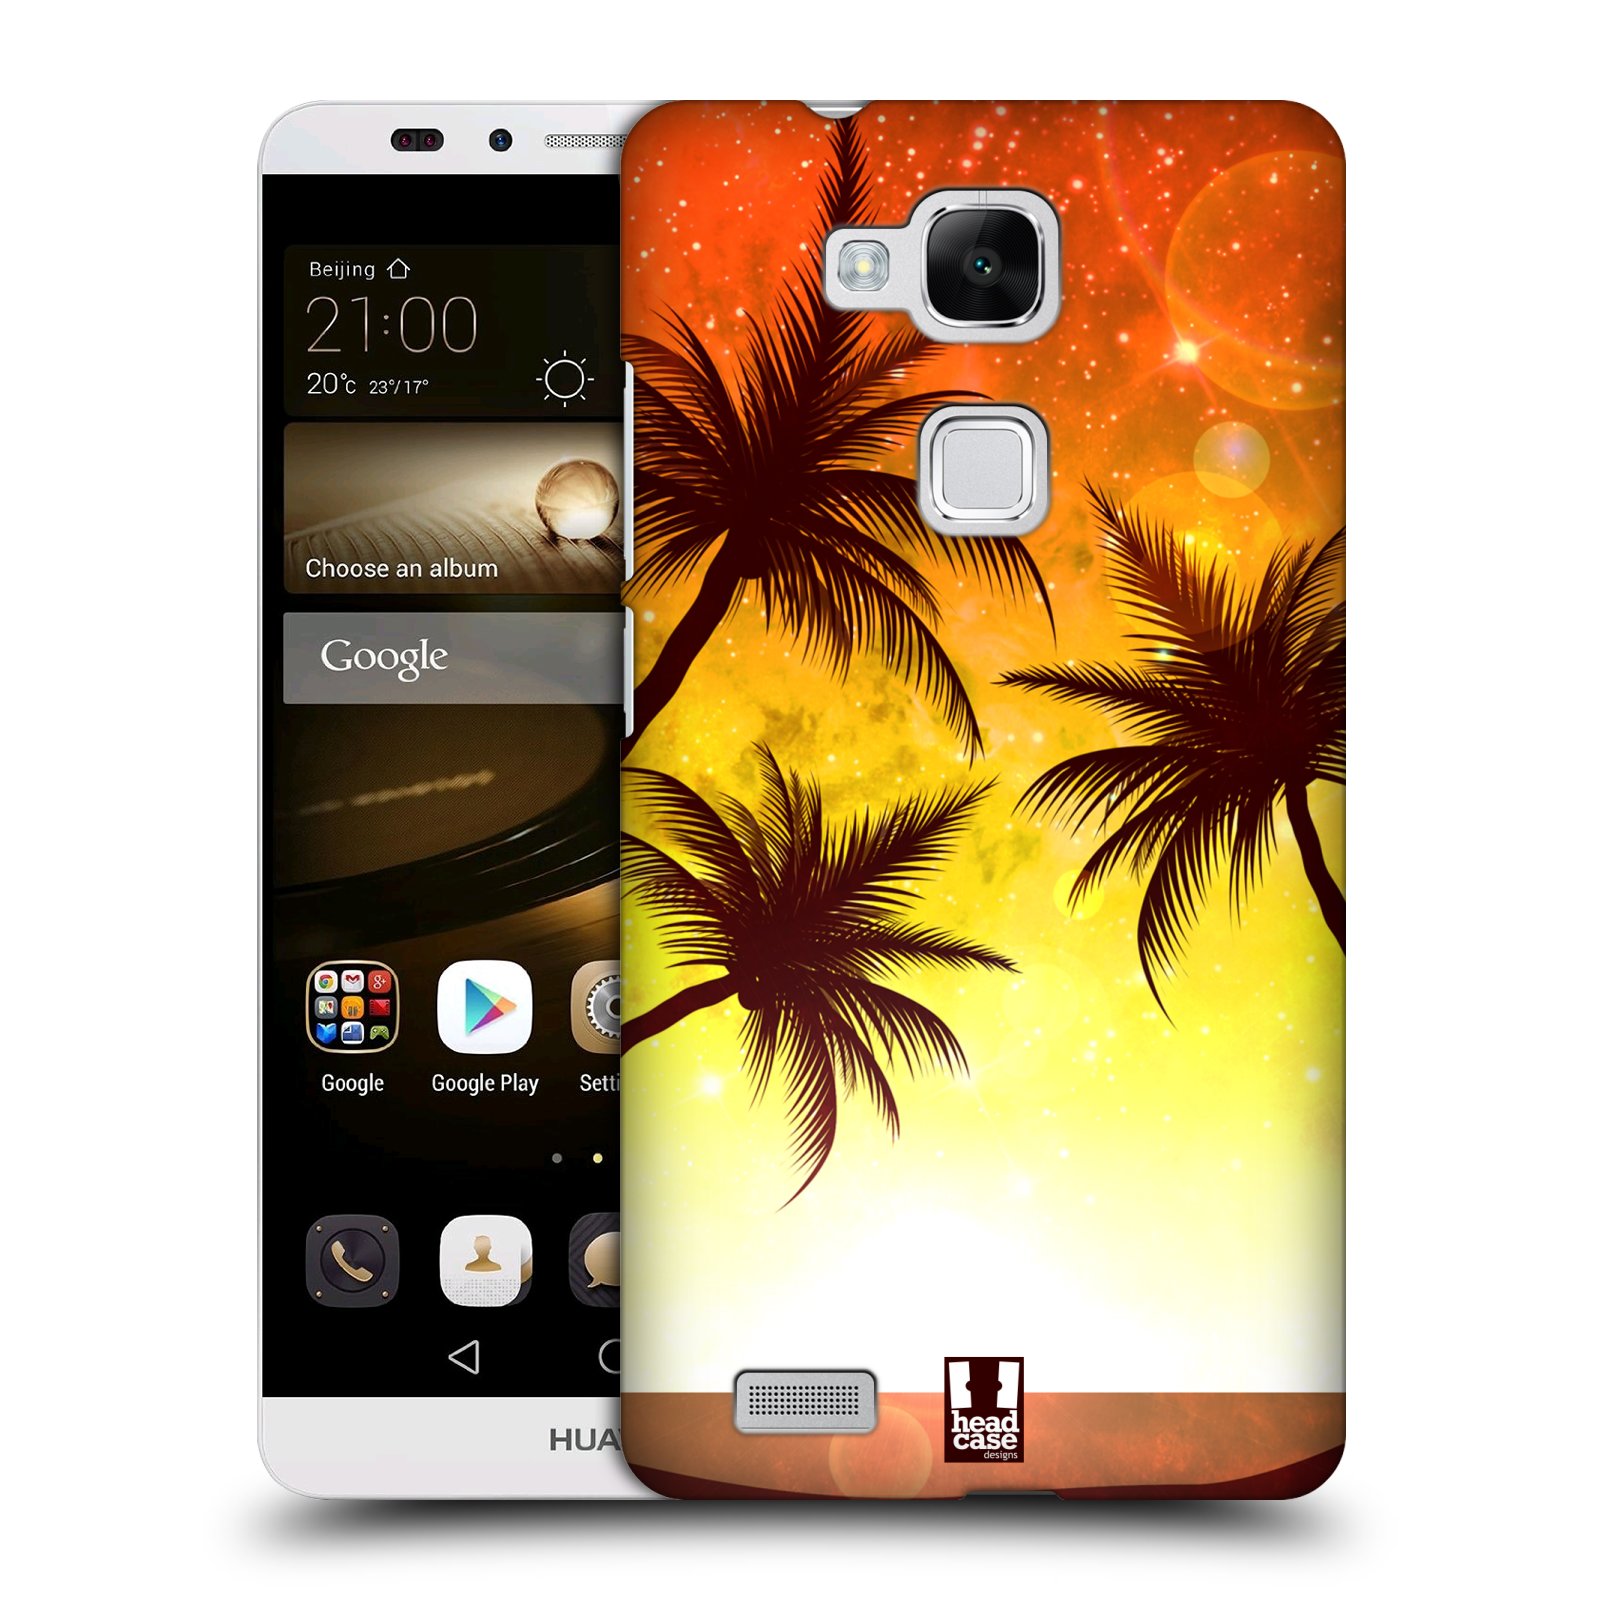 HEAD CASE plastový obal na mobil Huawei Mate 7 vzor Kreslený motiv silueta moře a palmy ORANŽOVÁ